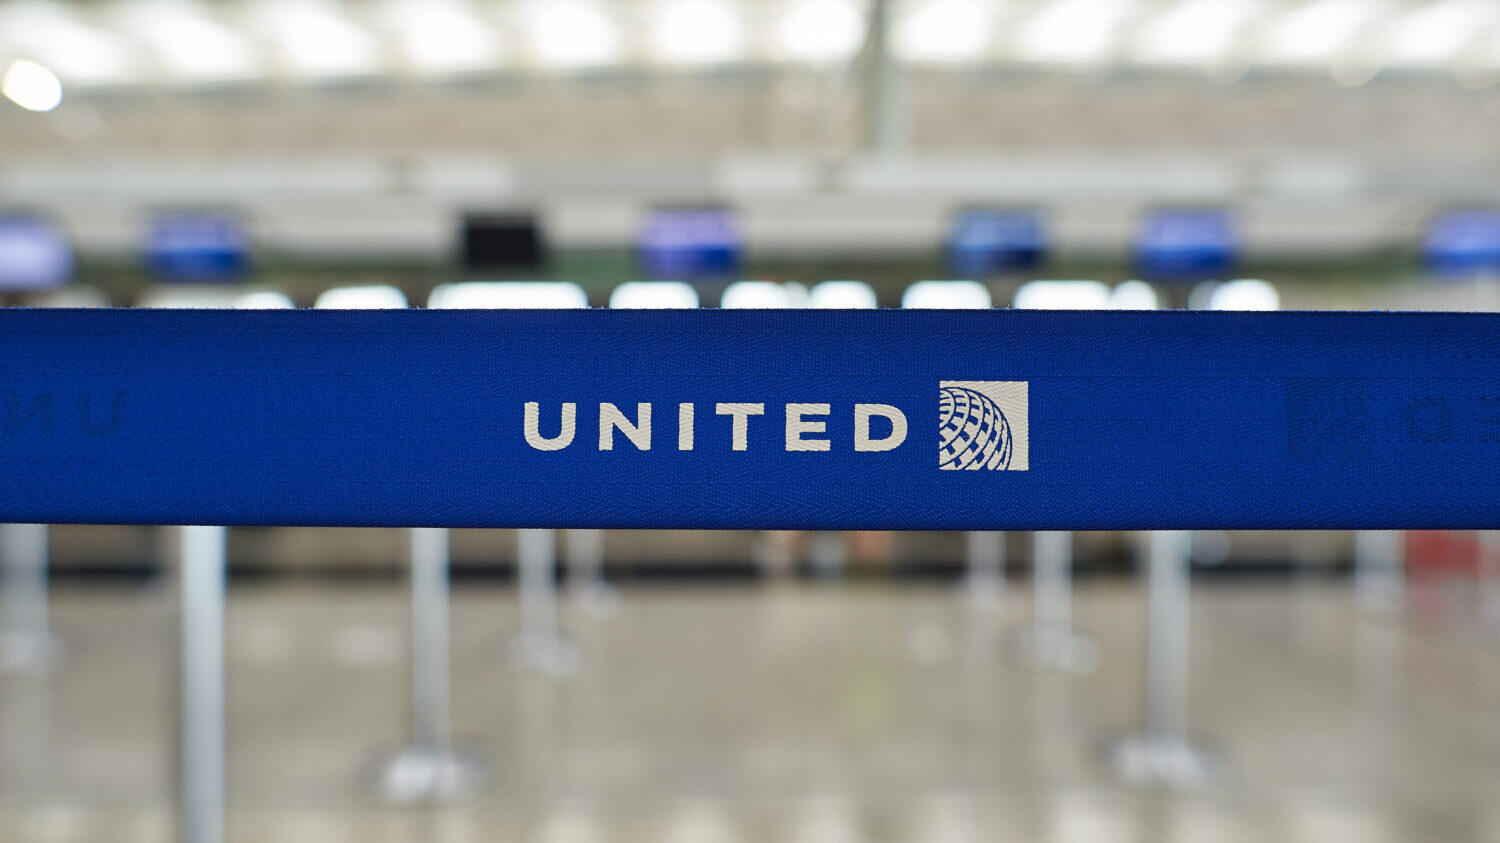 United Airlines logo in front of desks